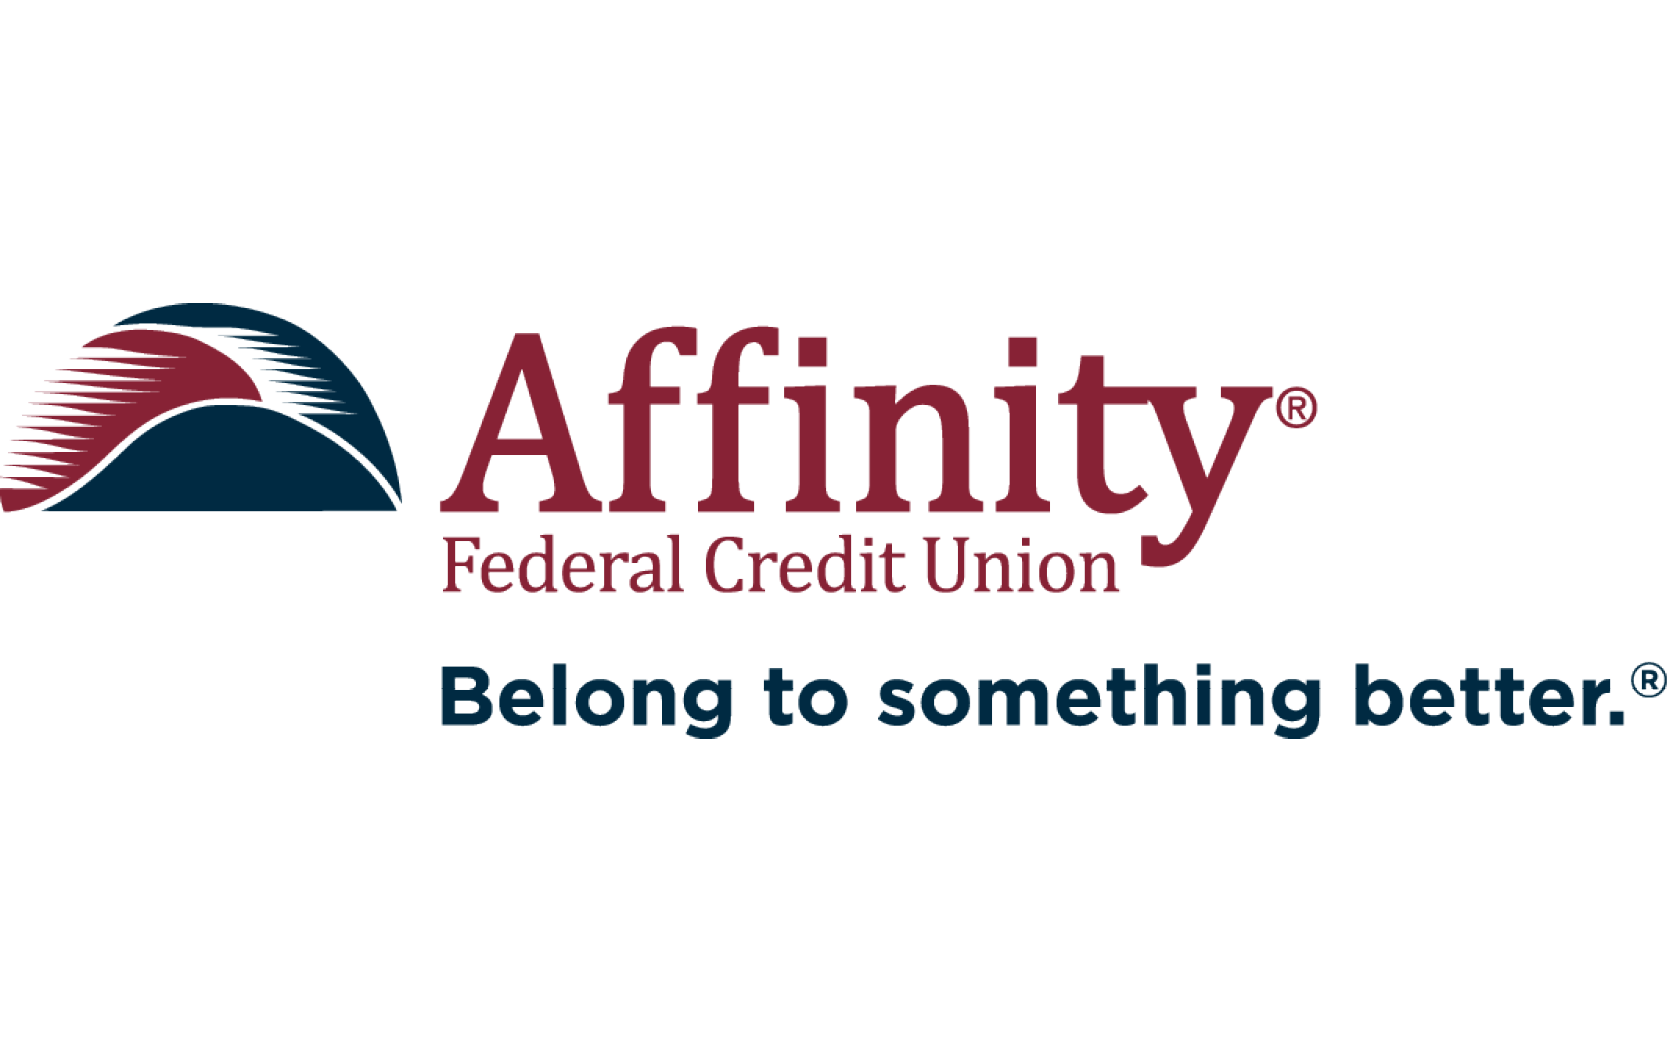 affinity federal credit union